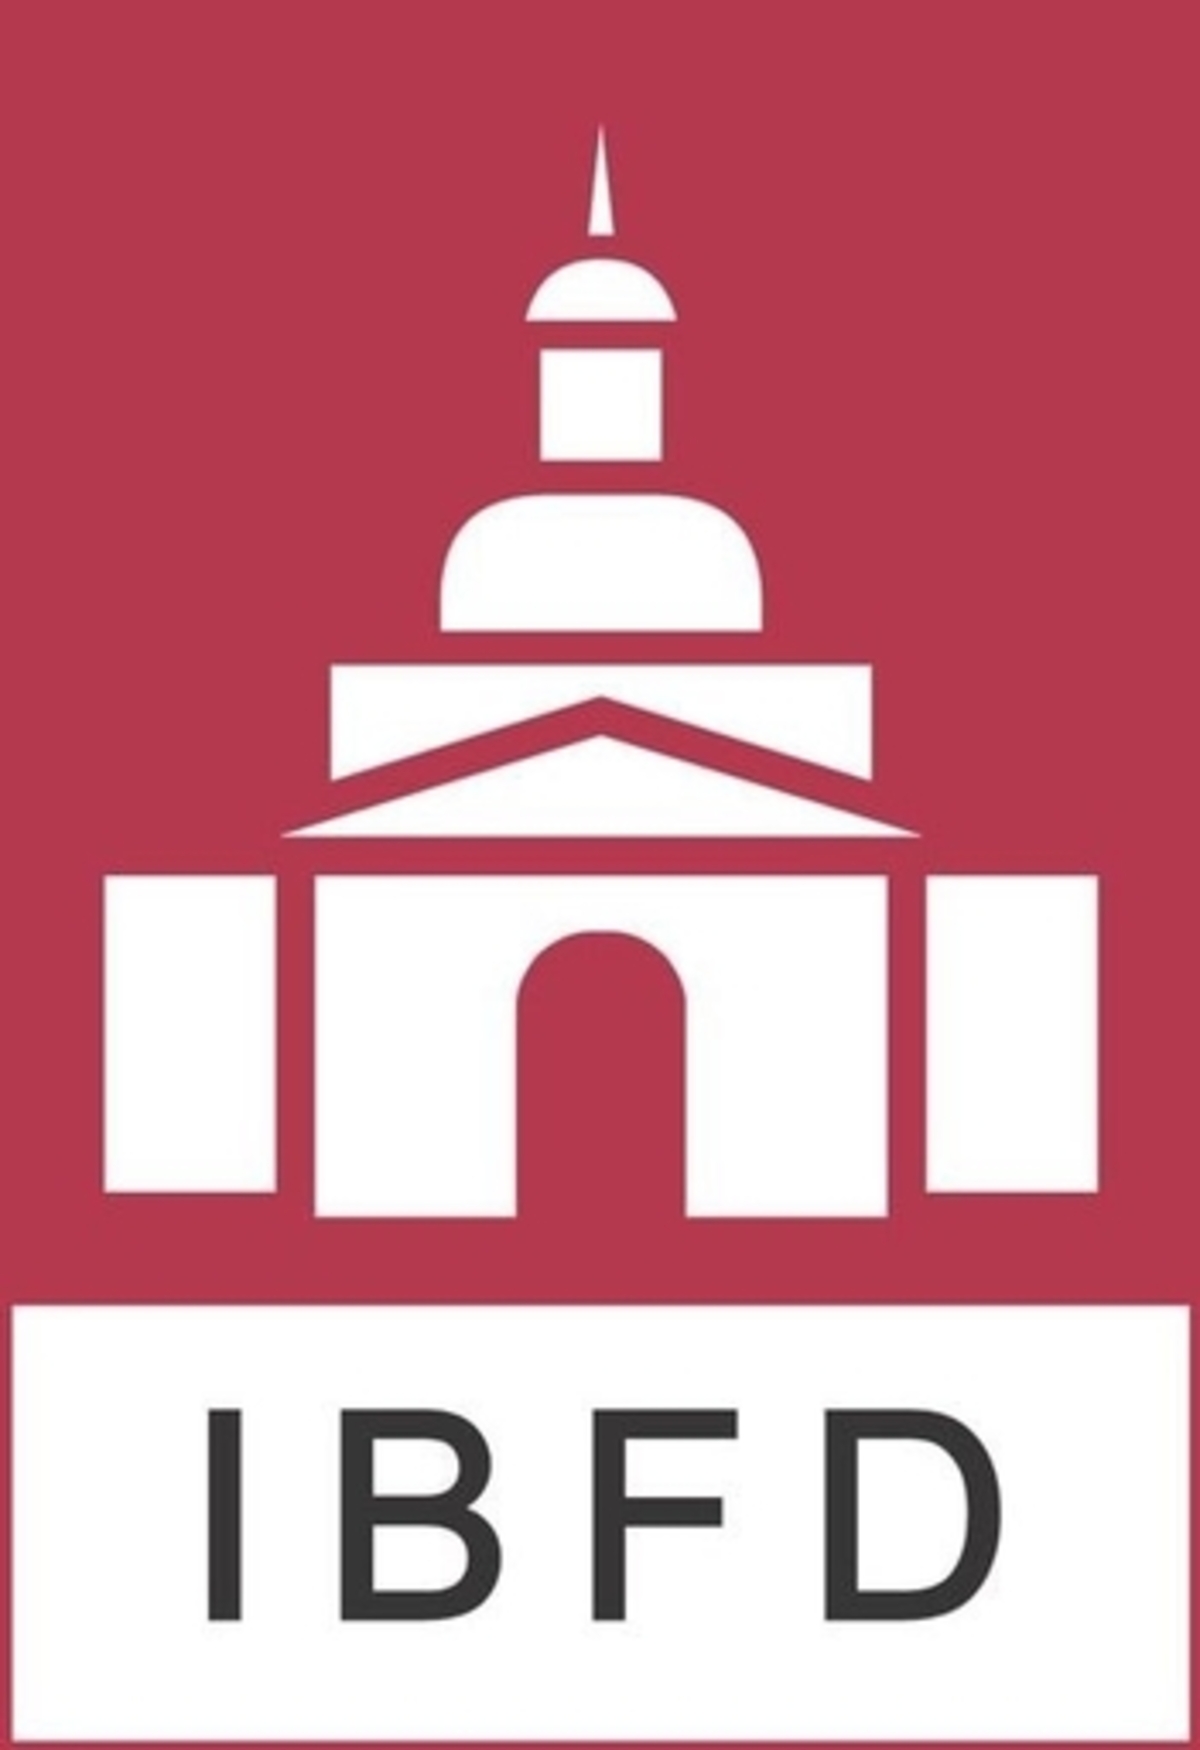 Logo International Bureu Fiscal Documentation (IBFD) Amsterdam